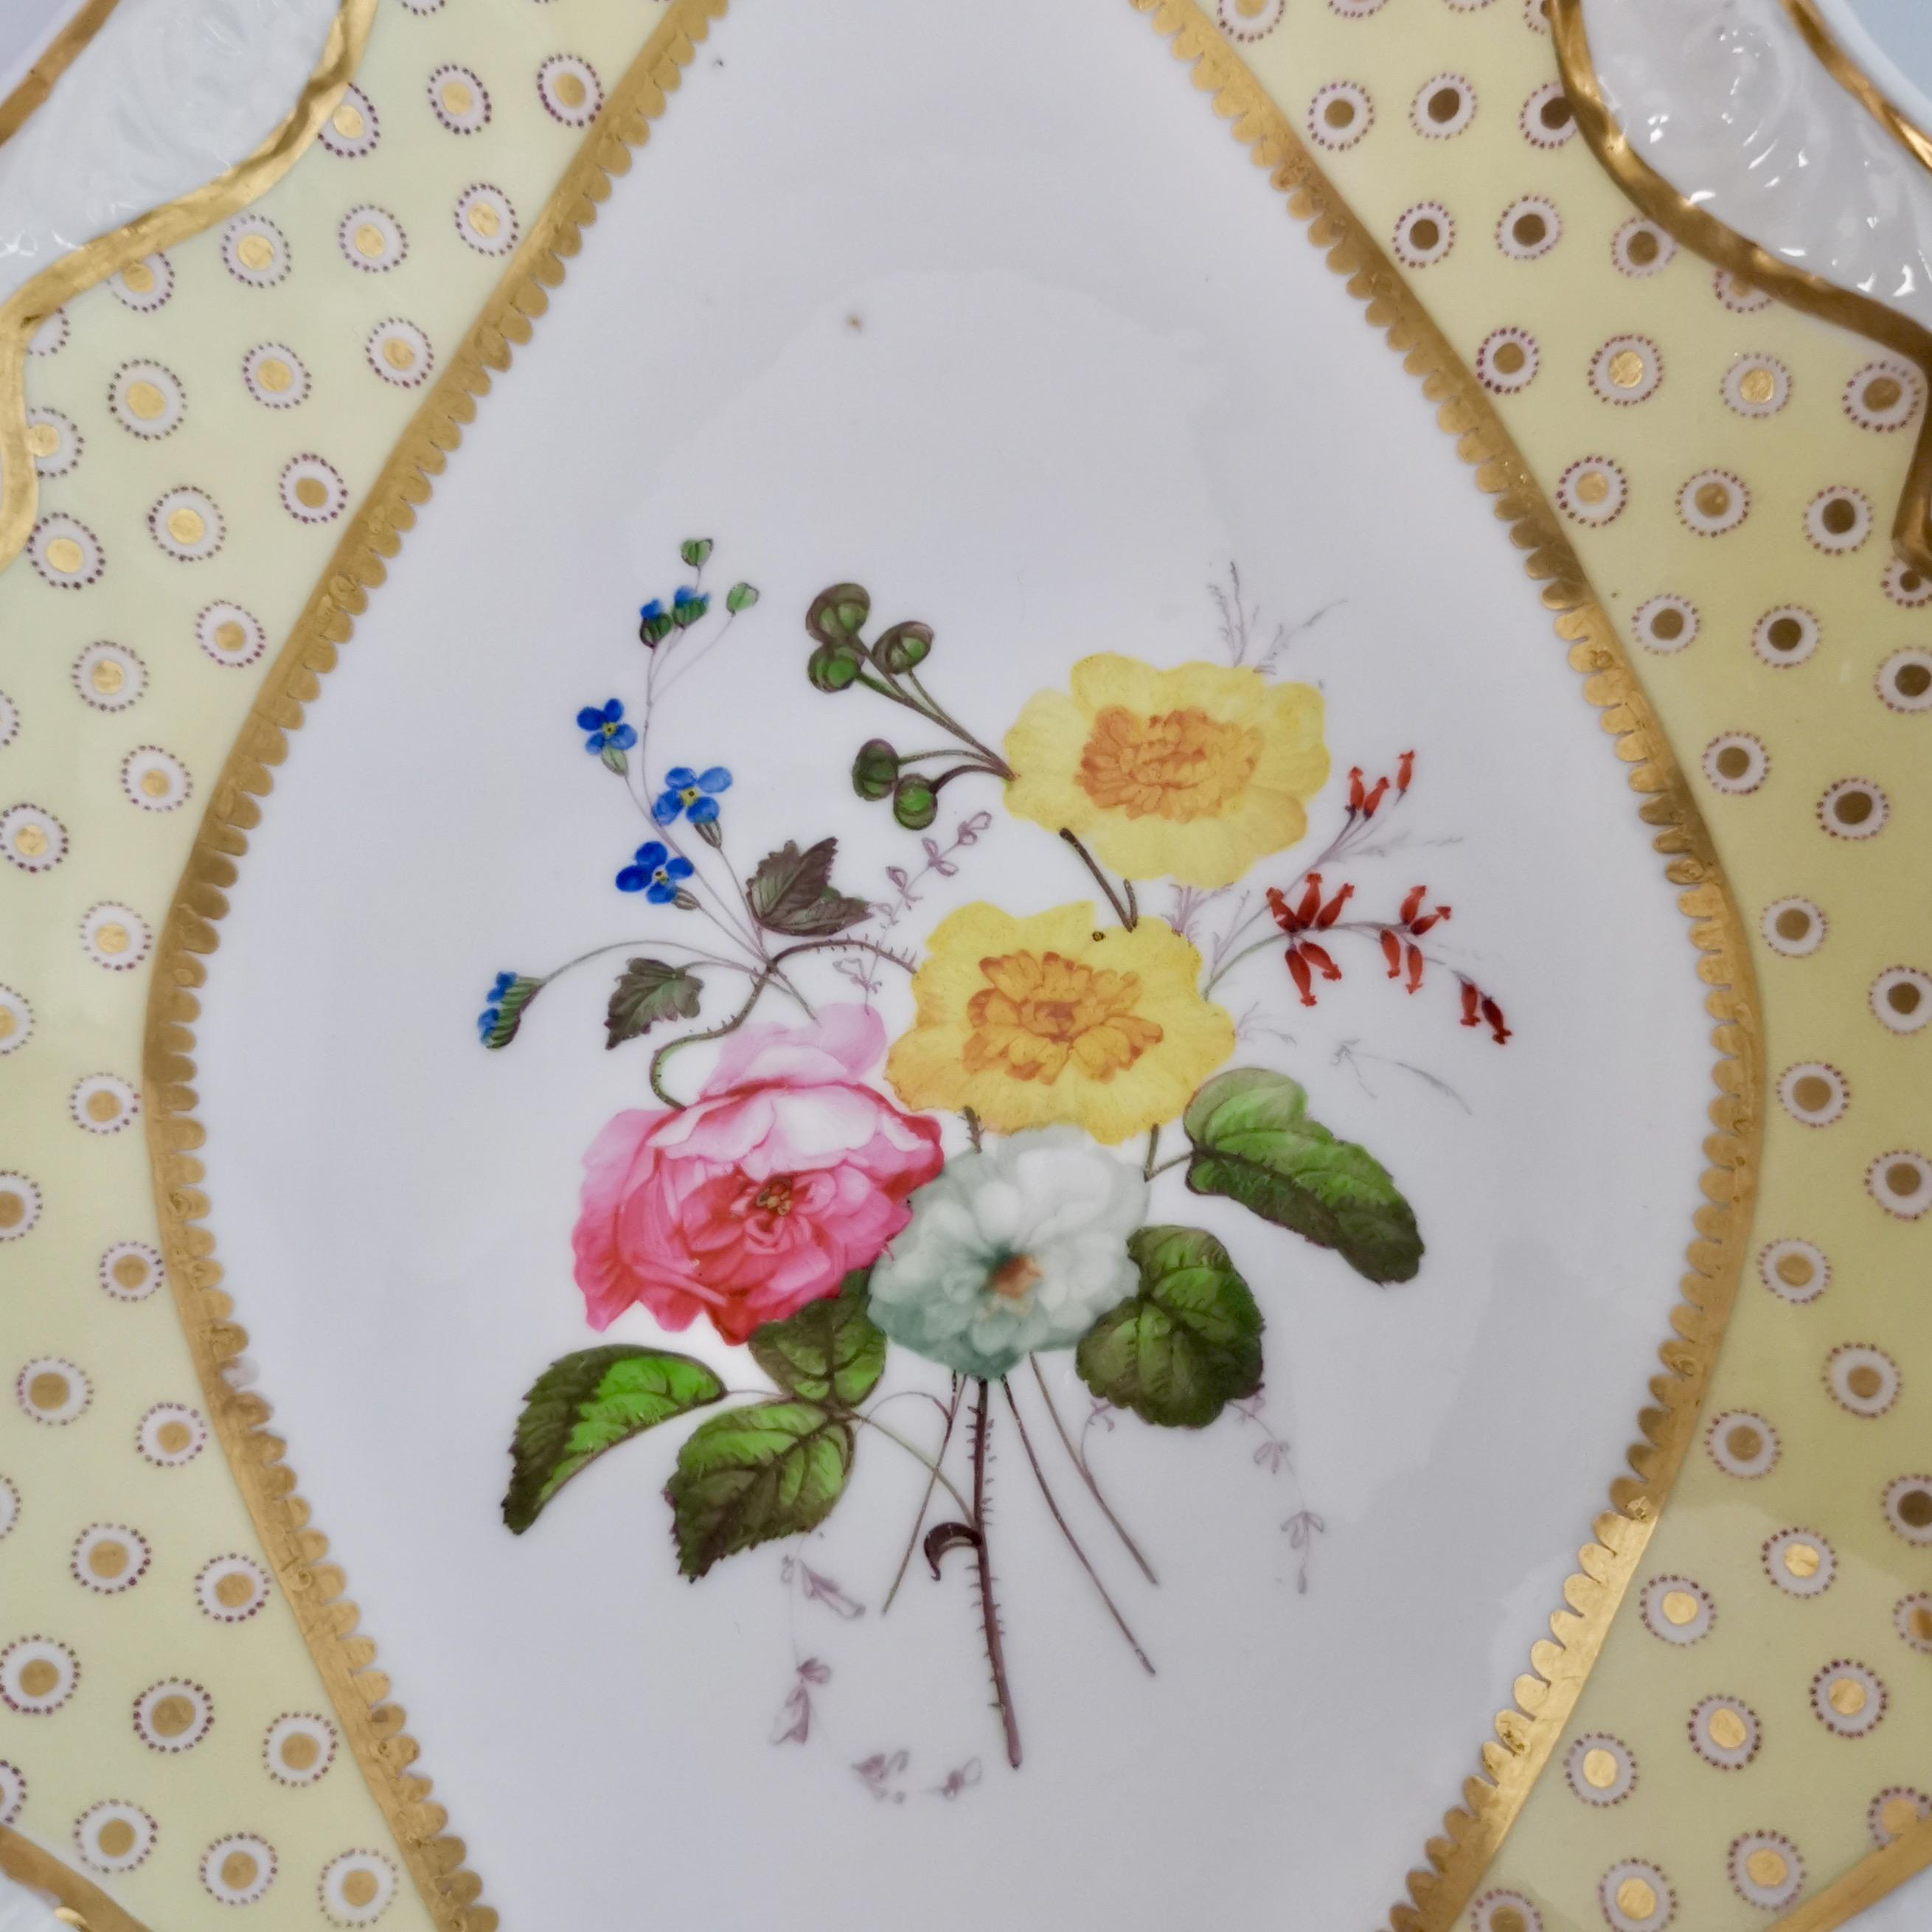 Spode Felspar Floral Dessert Service, Yellow, Butterfly Handles, circa 1822 For Sale 7